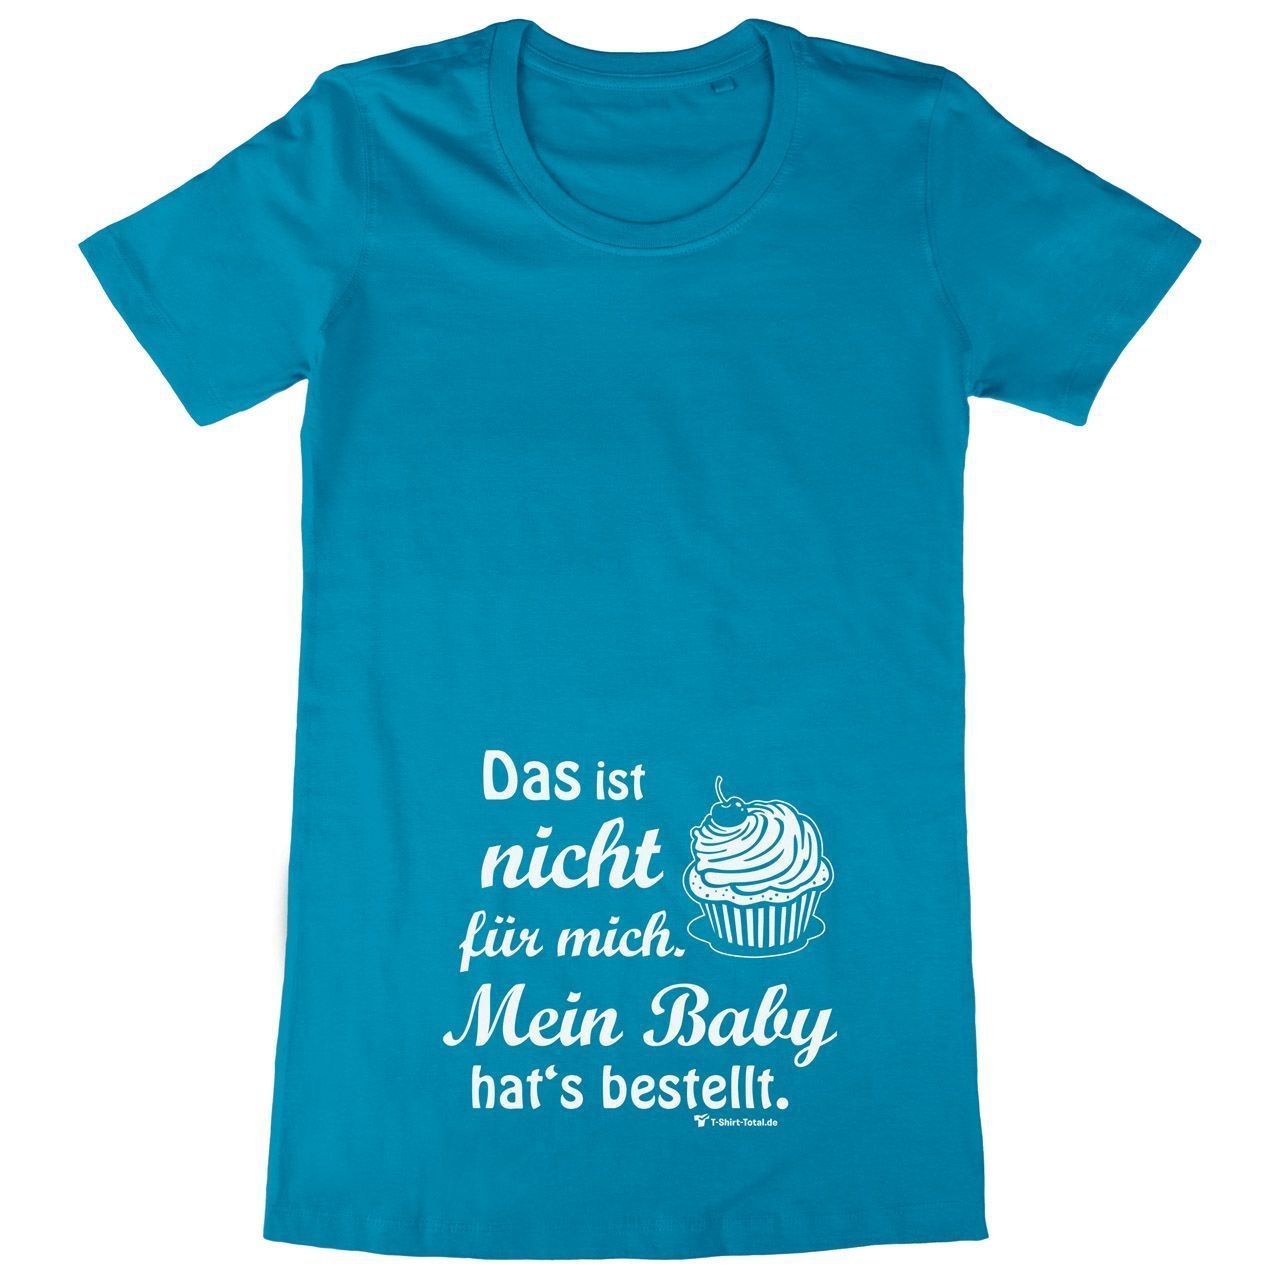 Baby hats bestellt Woman Long Shirt türkis 2-Extra Large